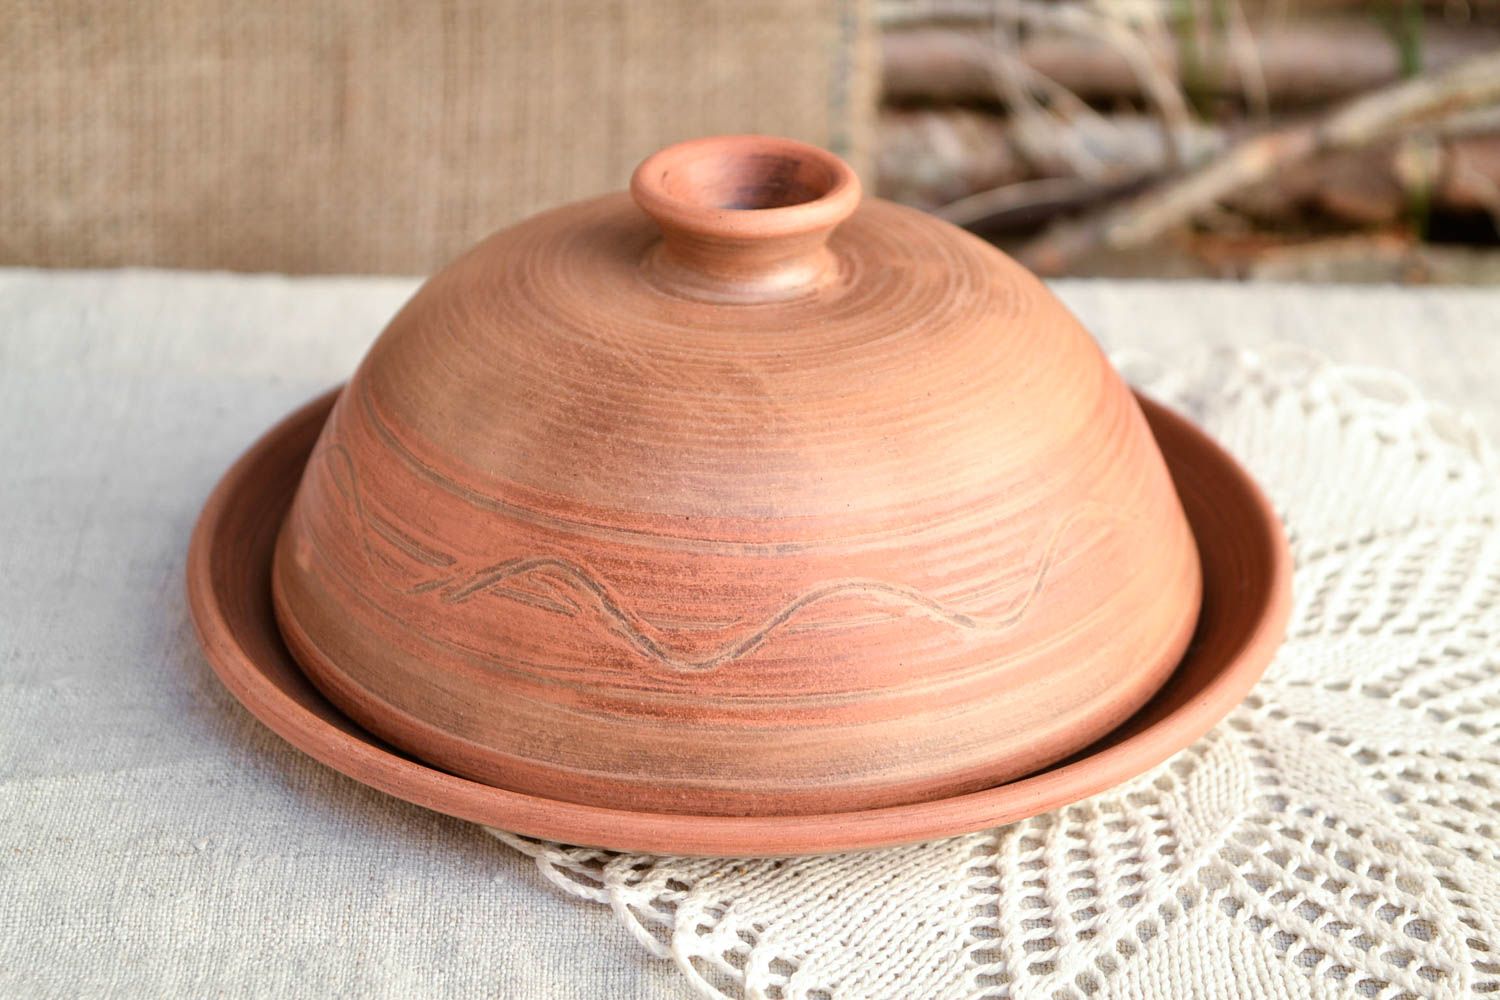 Plato de cerámica con tapa utensilio de cocina vasija de barro para manteca foto 1